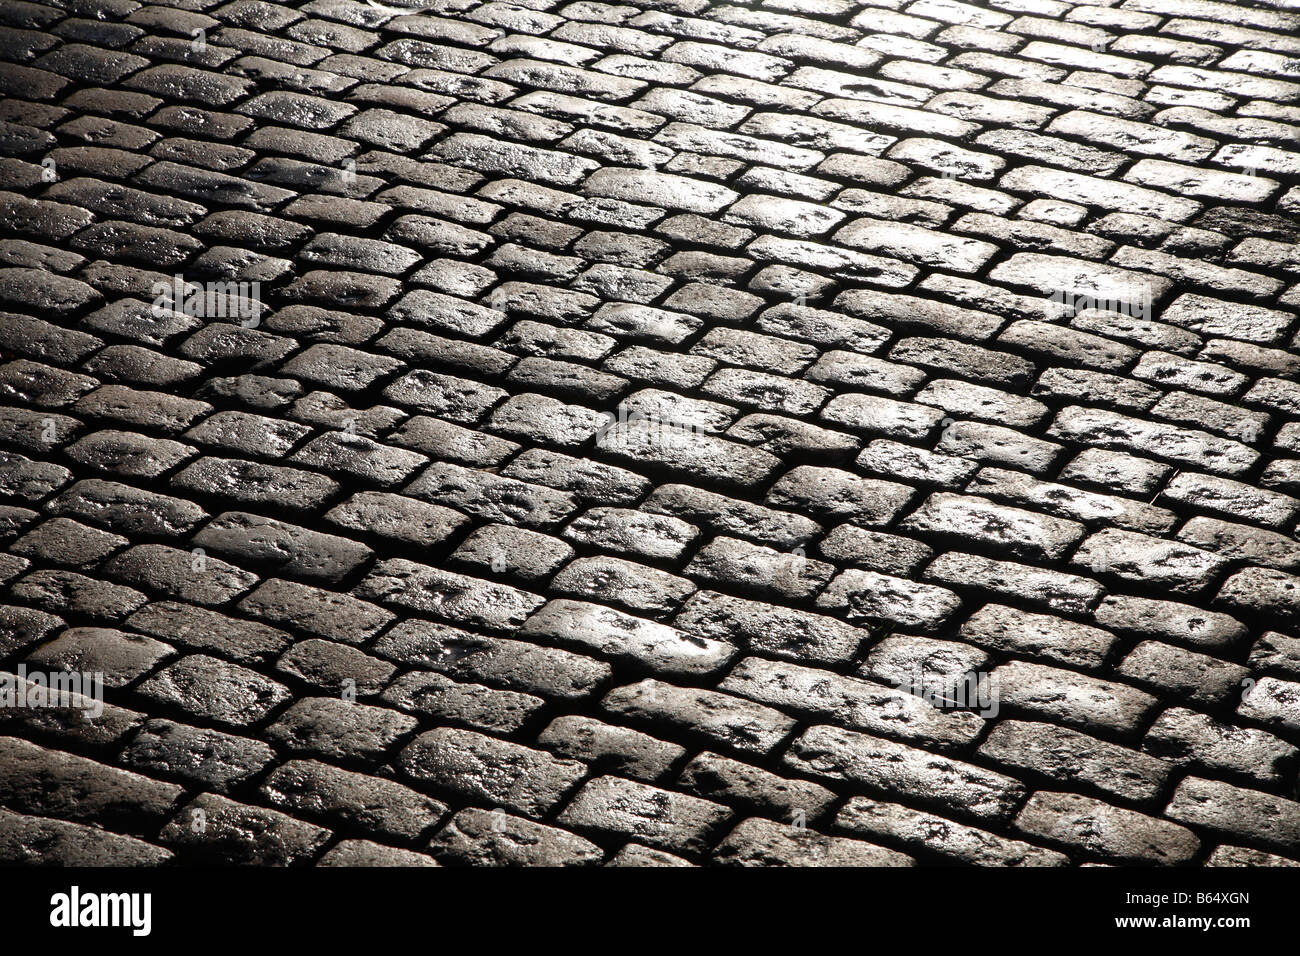 Shiny wet cobblestones in Plymouth, Devon UK. Stock Photo